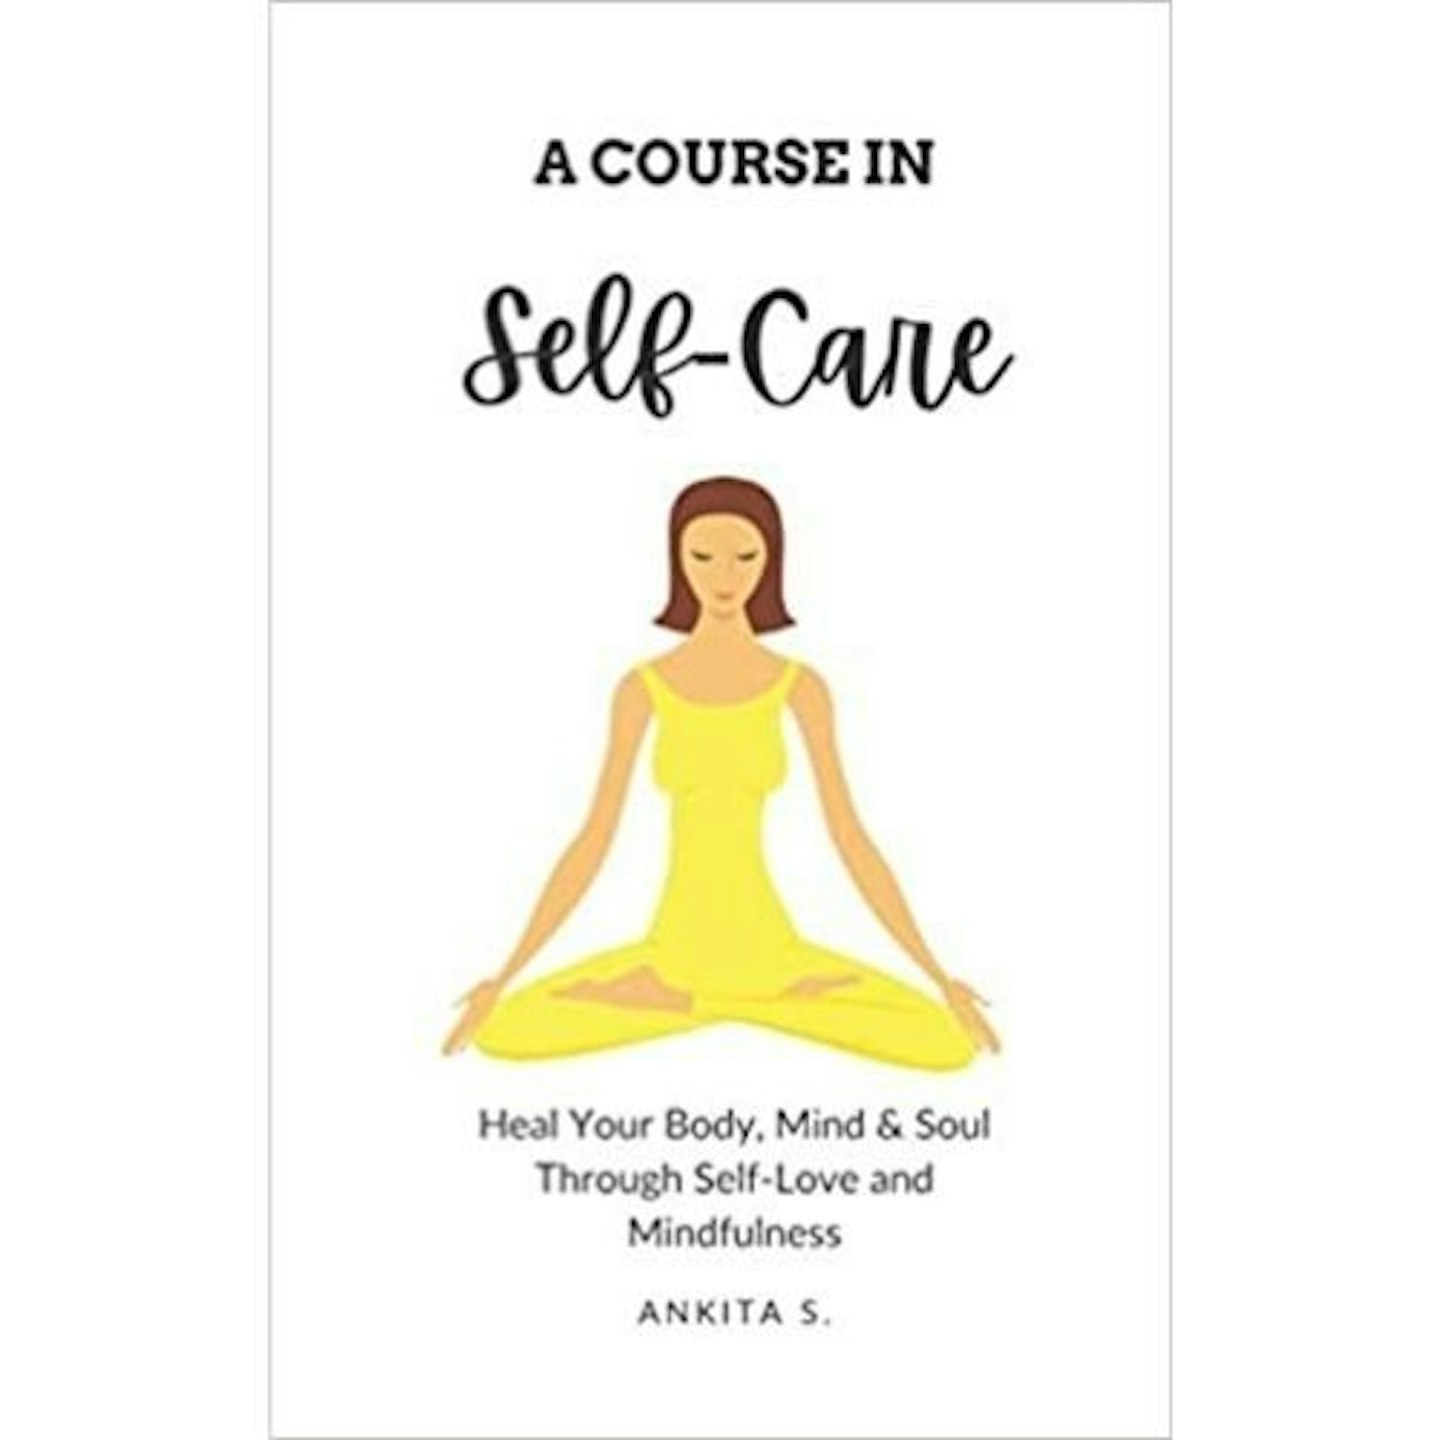 A course in self-care